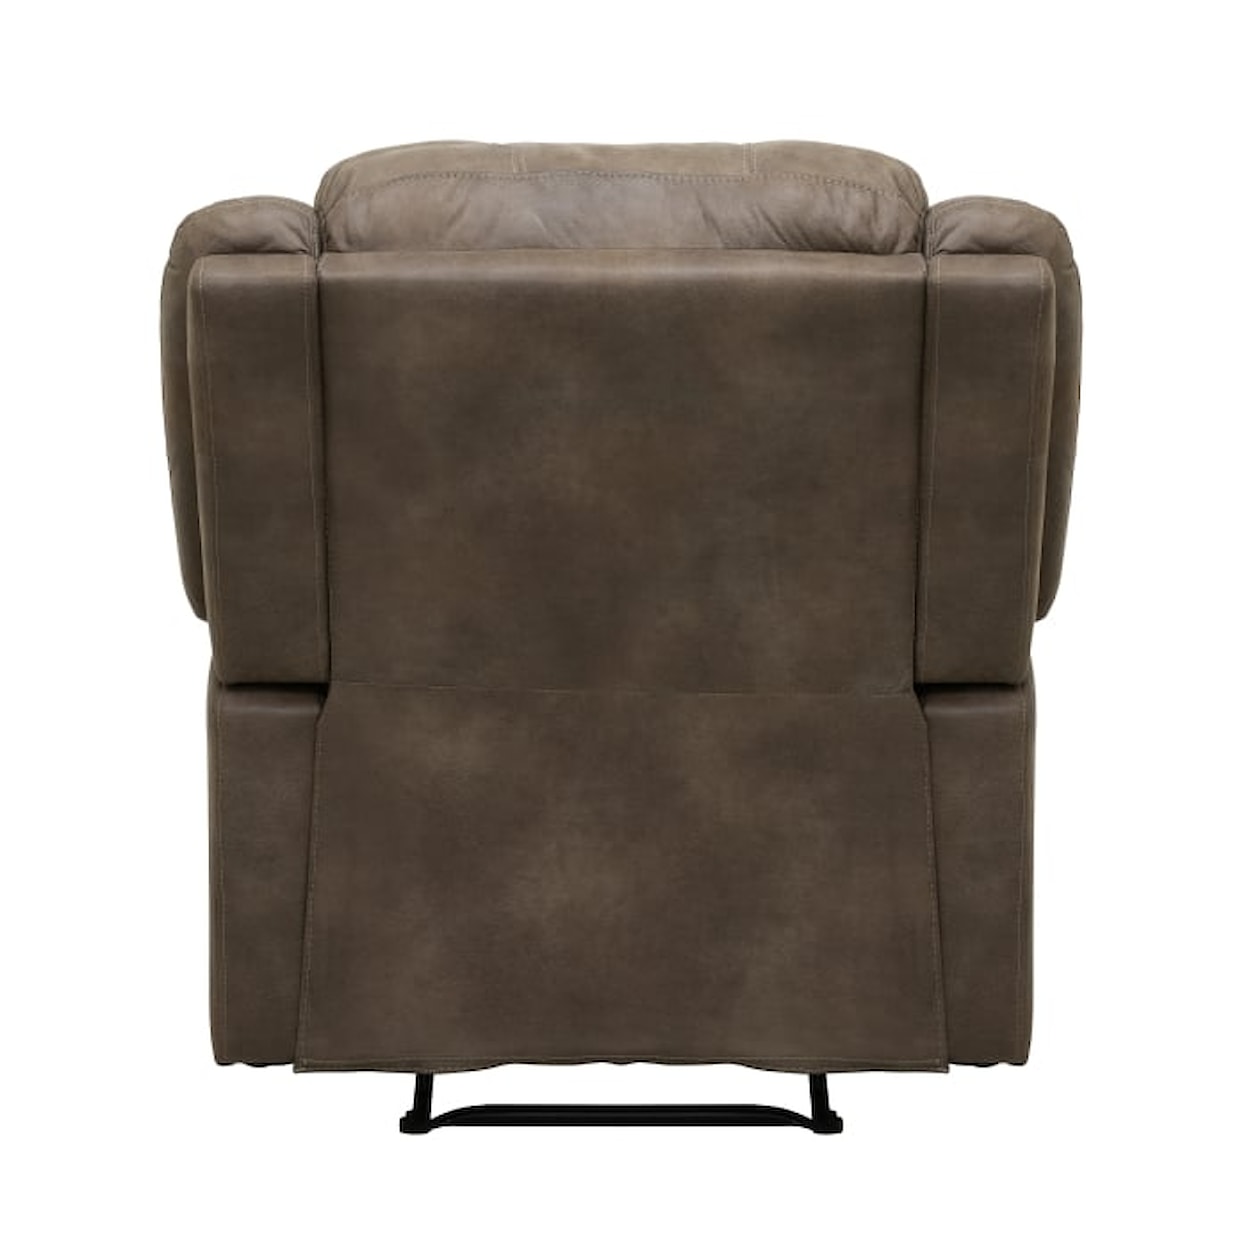 Homelegance Furniture Fairview Reclining Chair